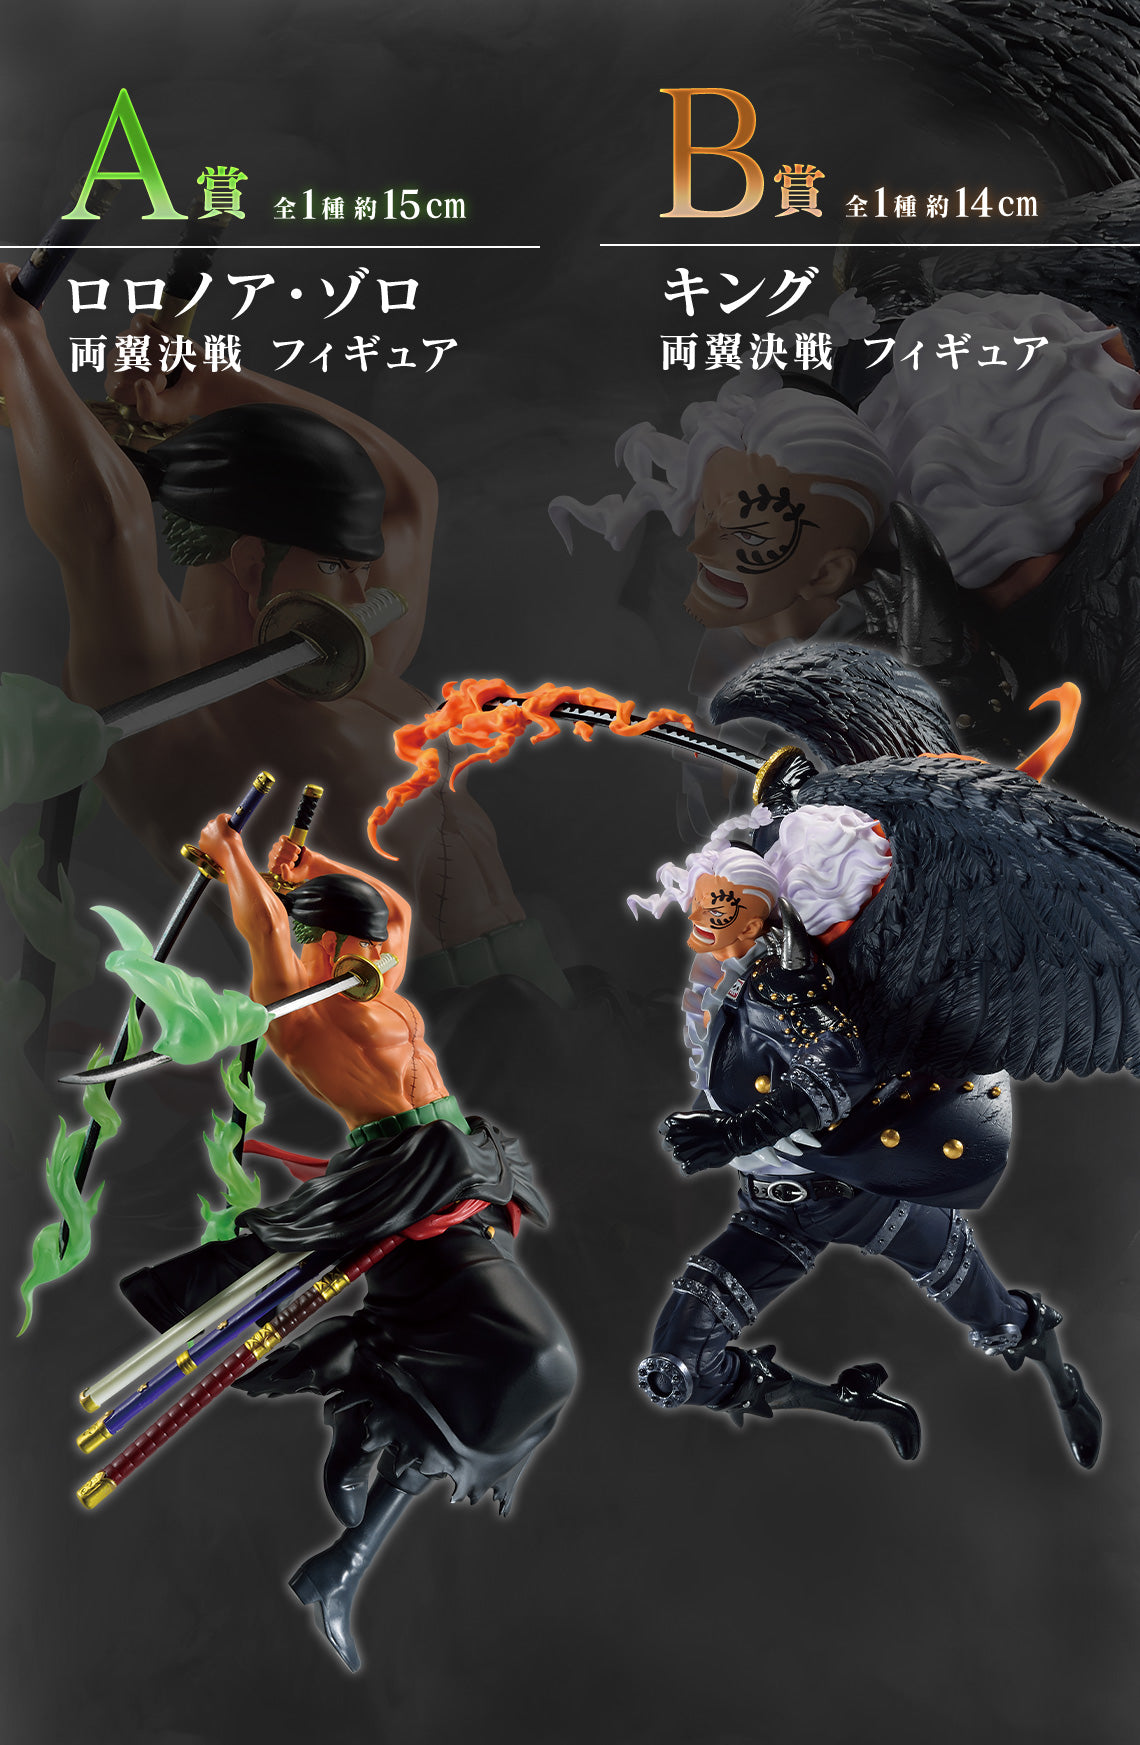 Ichiban Kuji One Piece Wings Battle Roronoa Zoro Last One Prize Figure